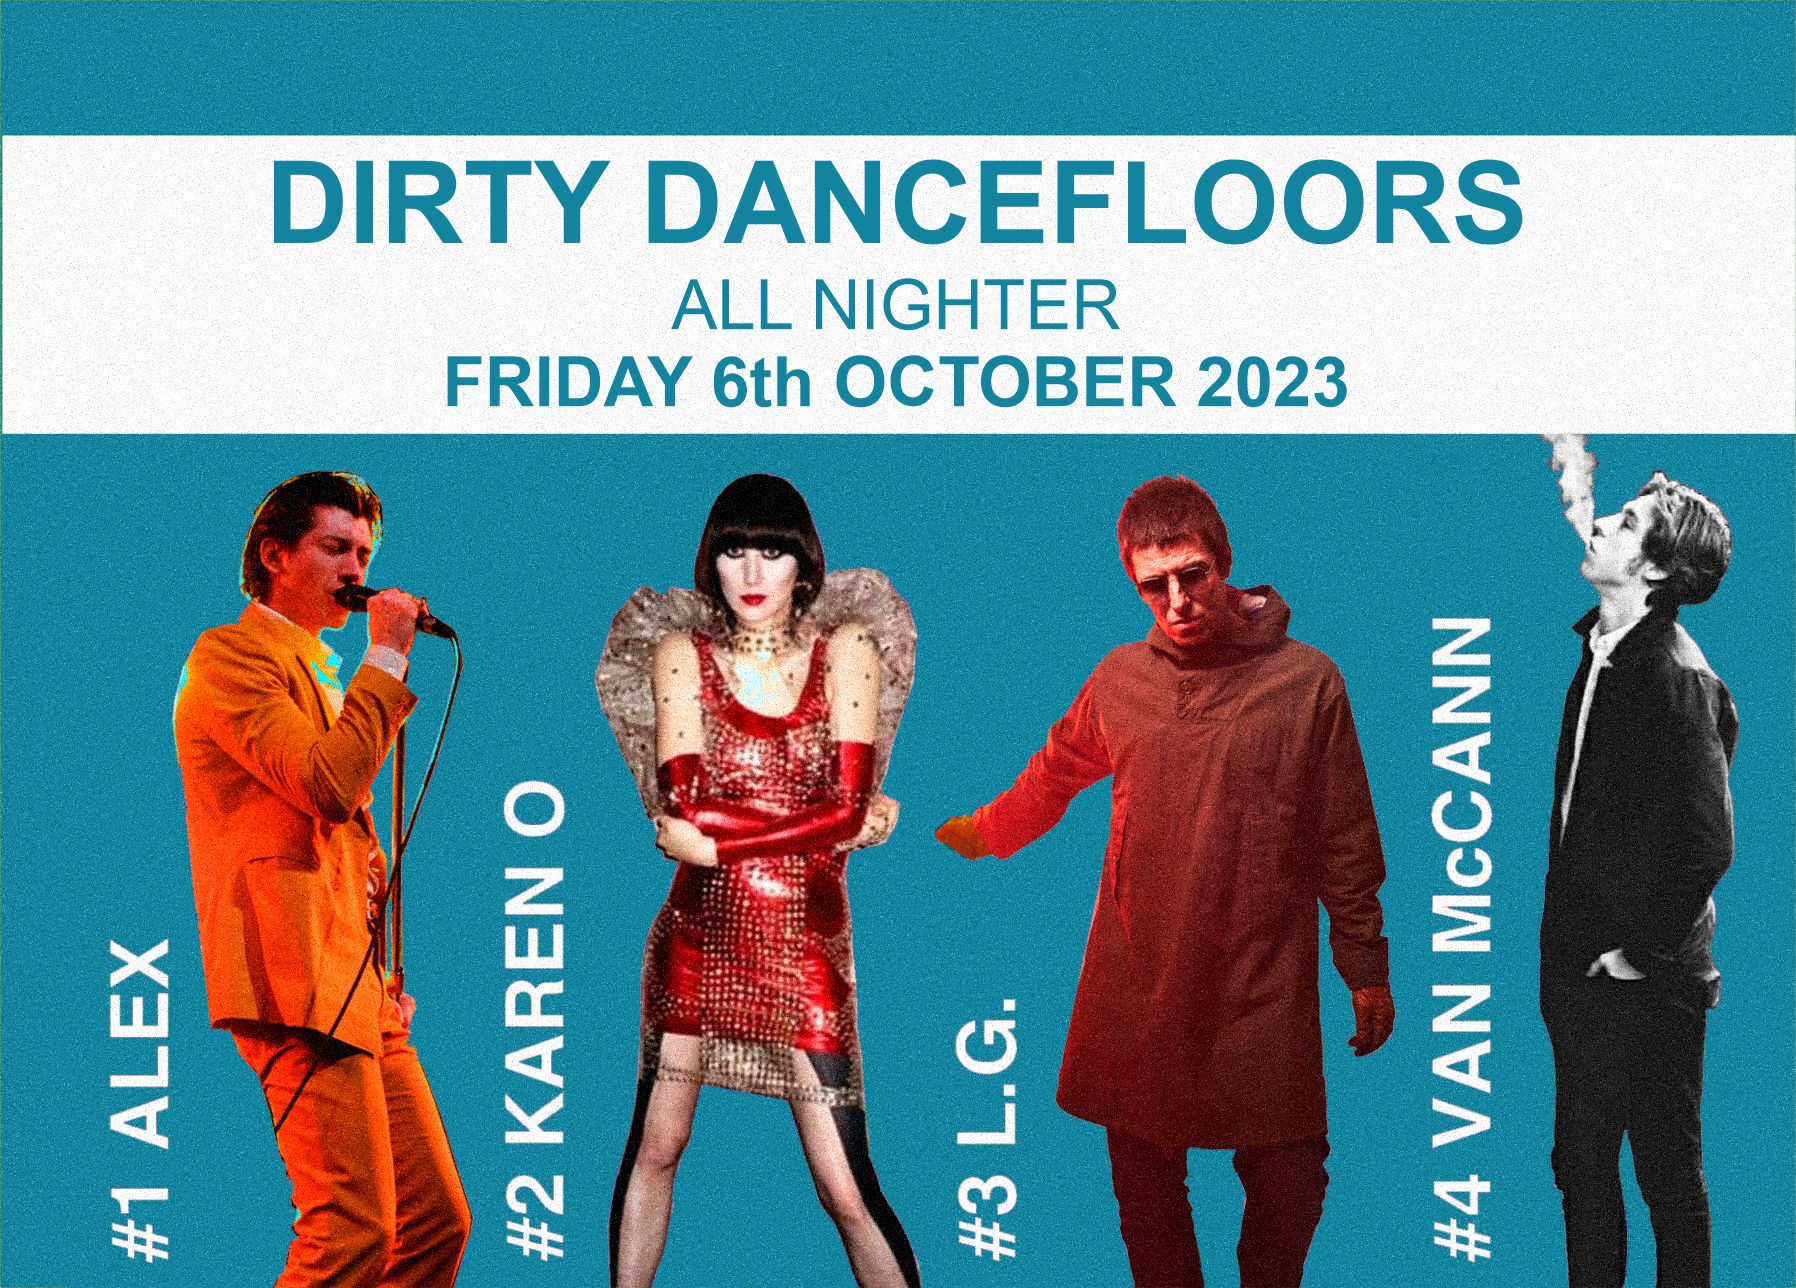 Dirty Dancefloors ALL NIGHTER